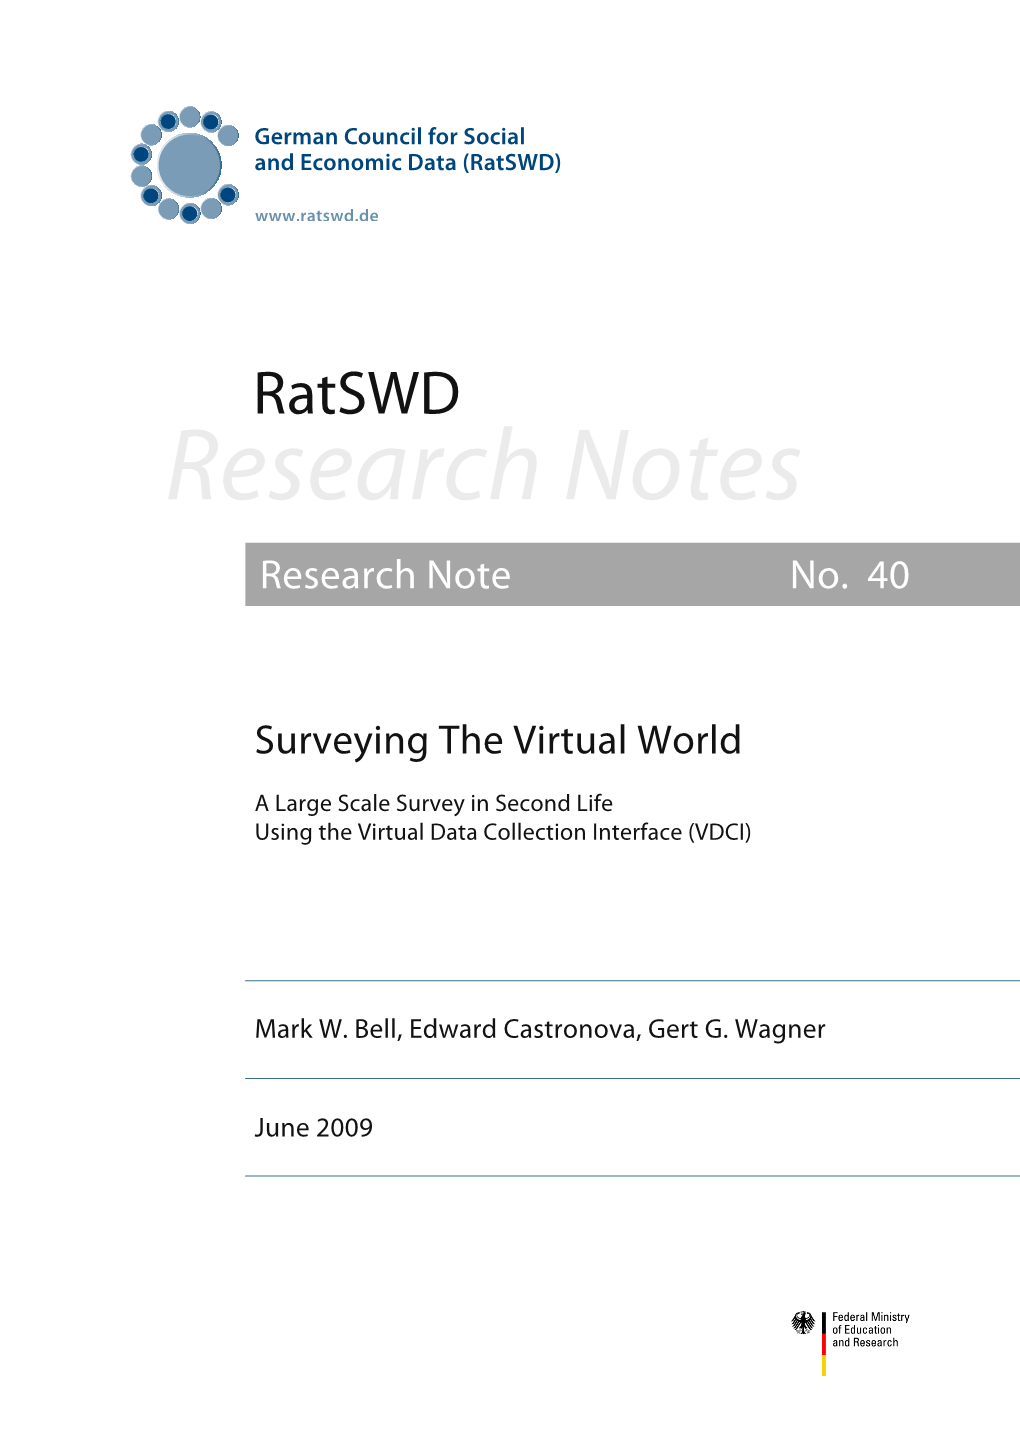 Surveying the Virtual World